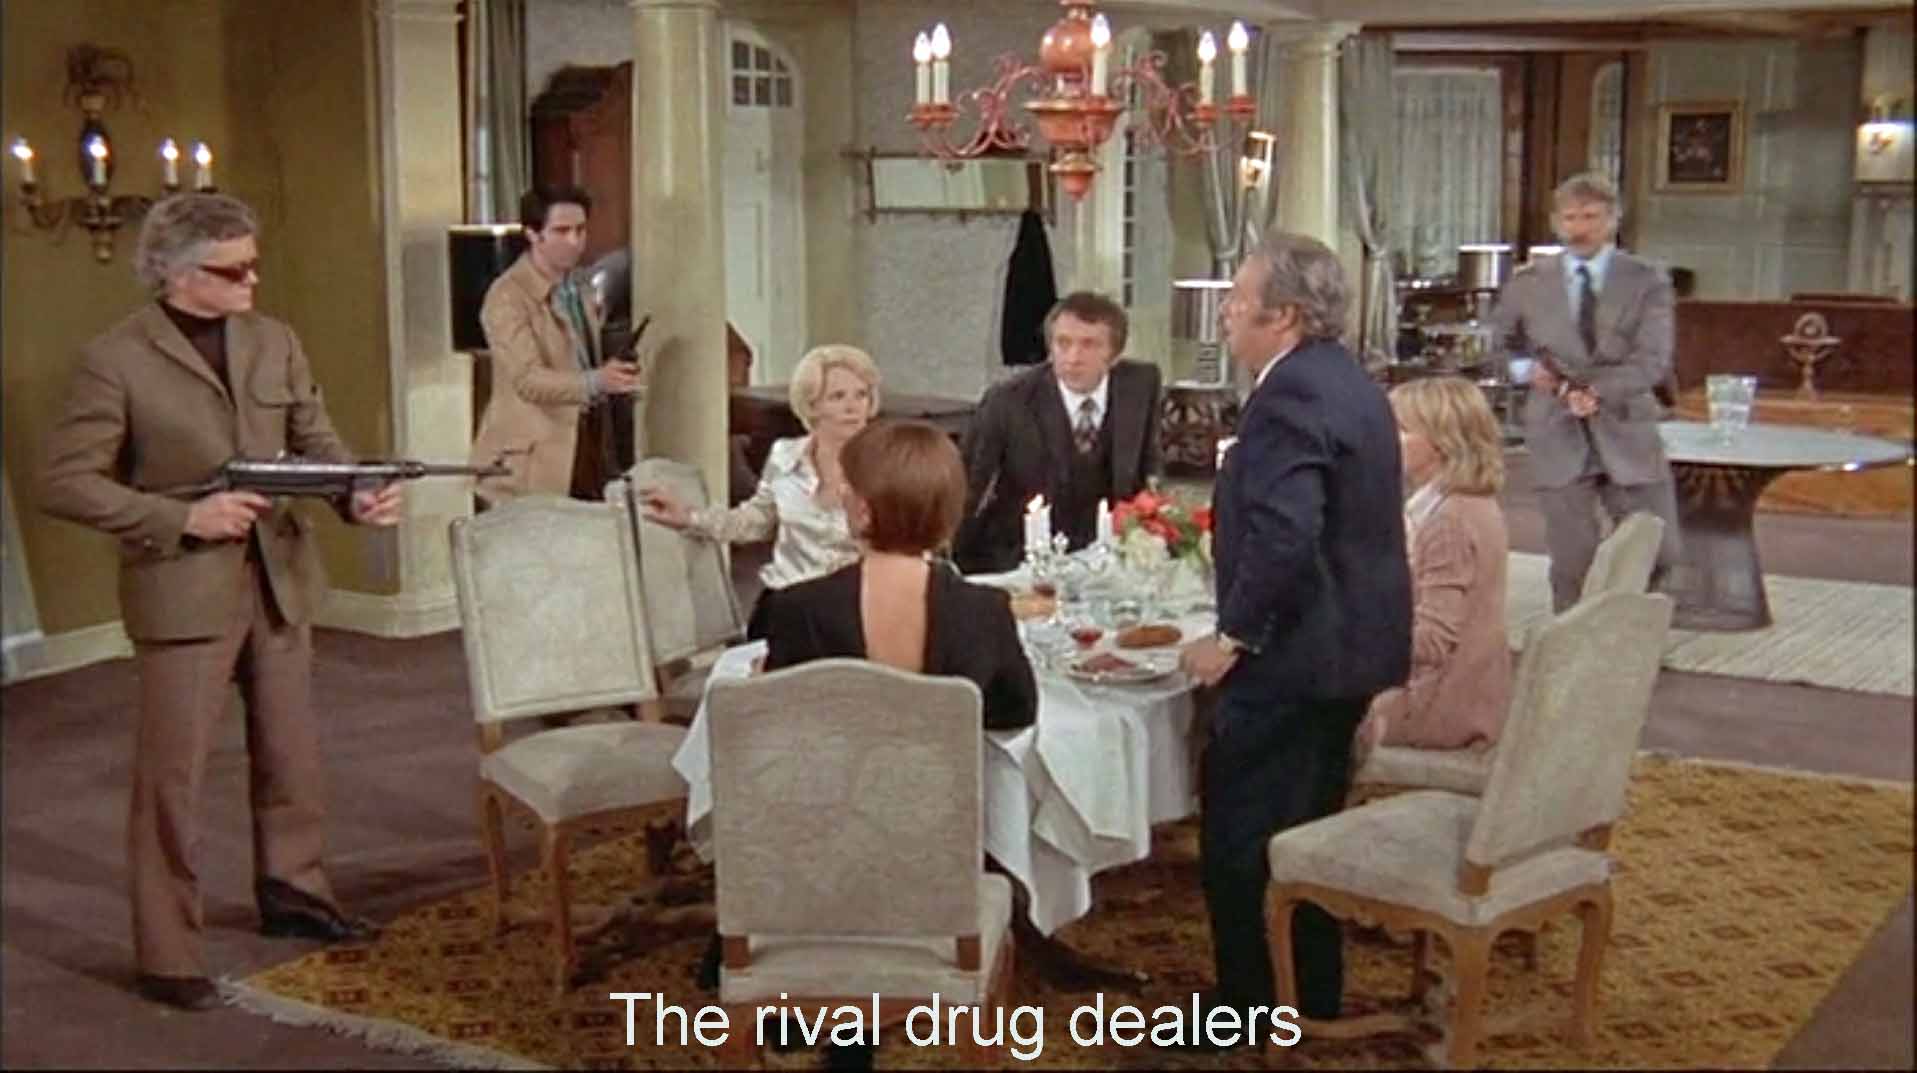 The rival drug dealers